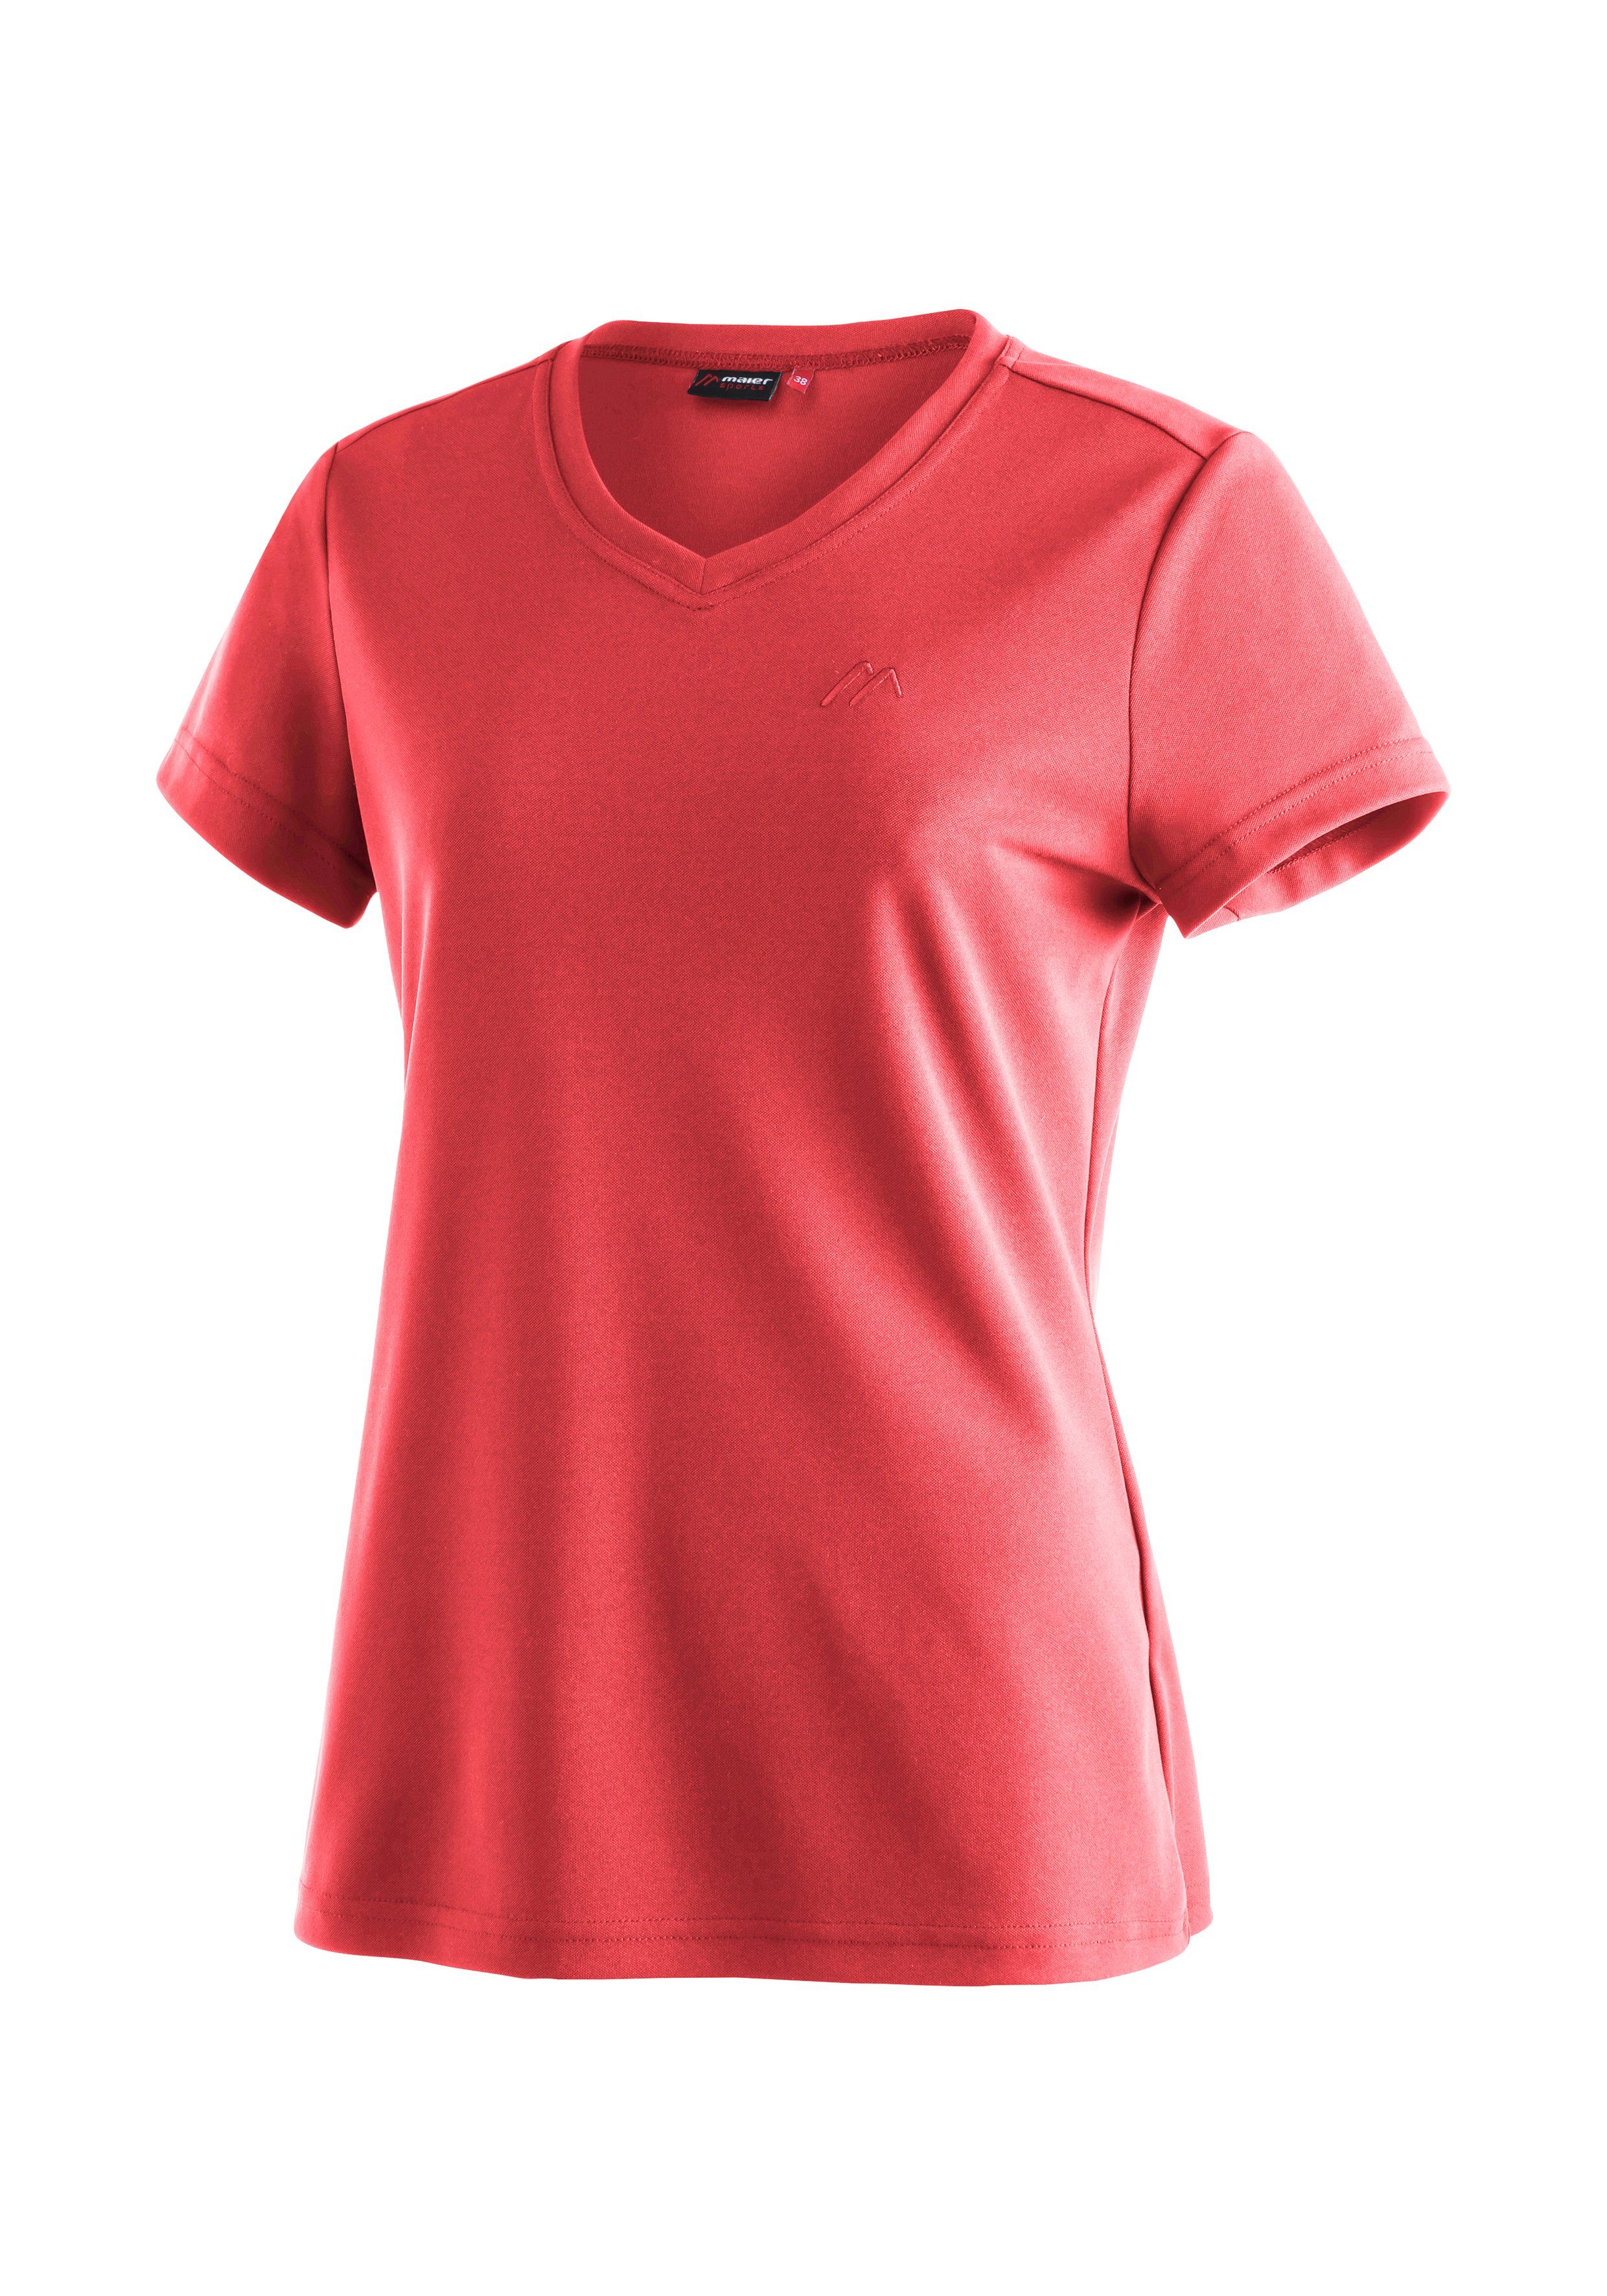 T-Shirt, Wandern Funktionsshirt Sports Kurzarmshirt Maier für Freizeit hellrot Trudy und Damen